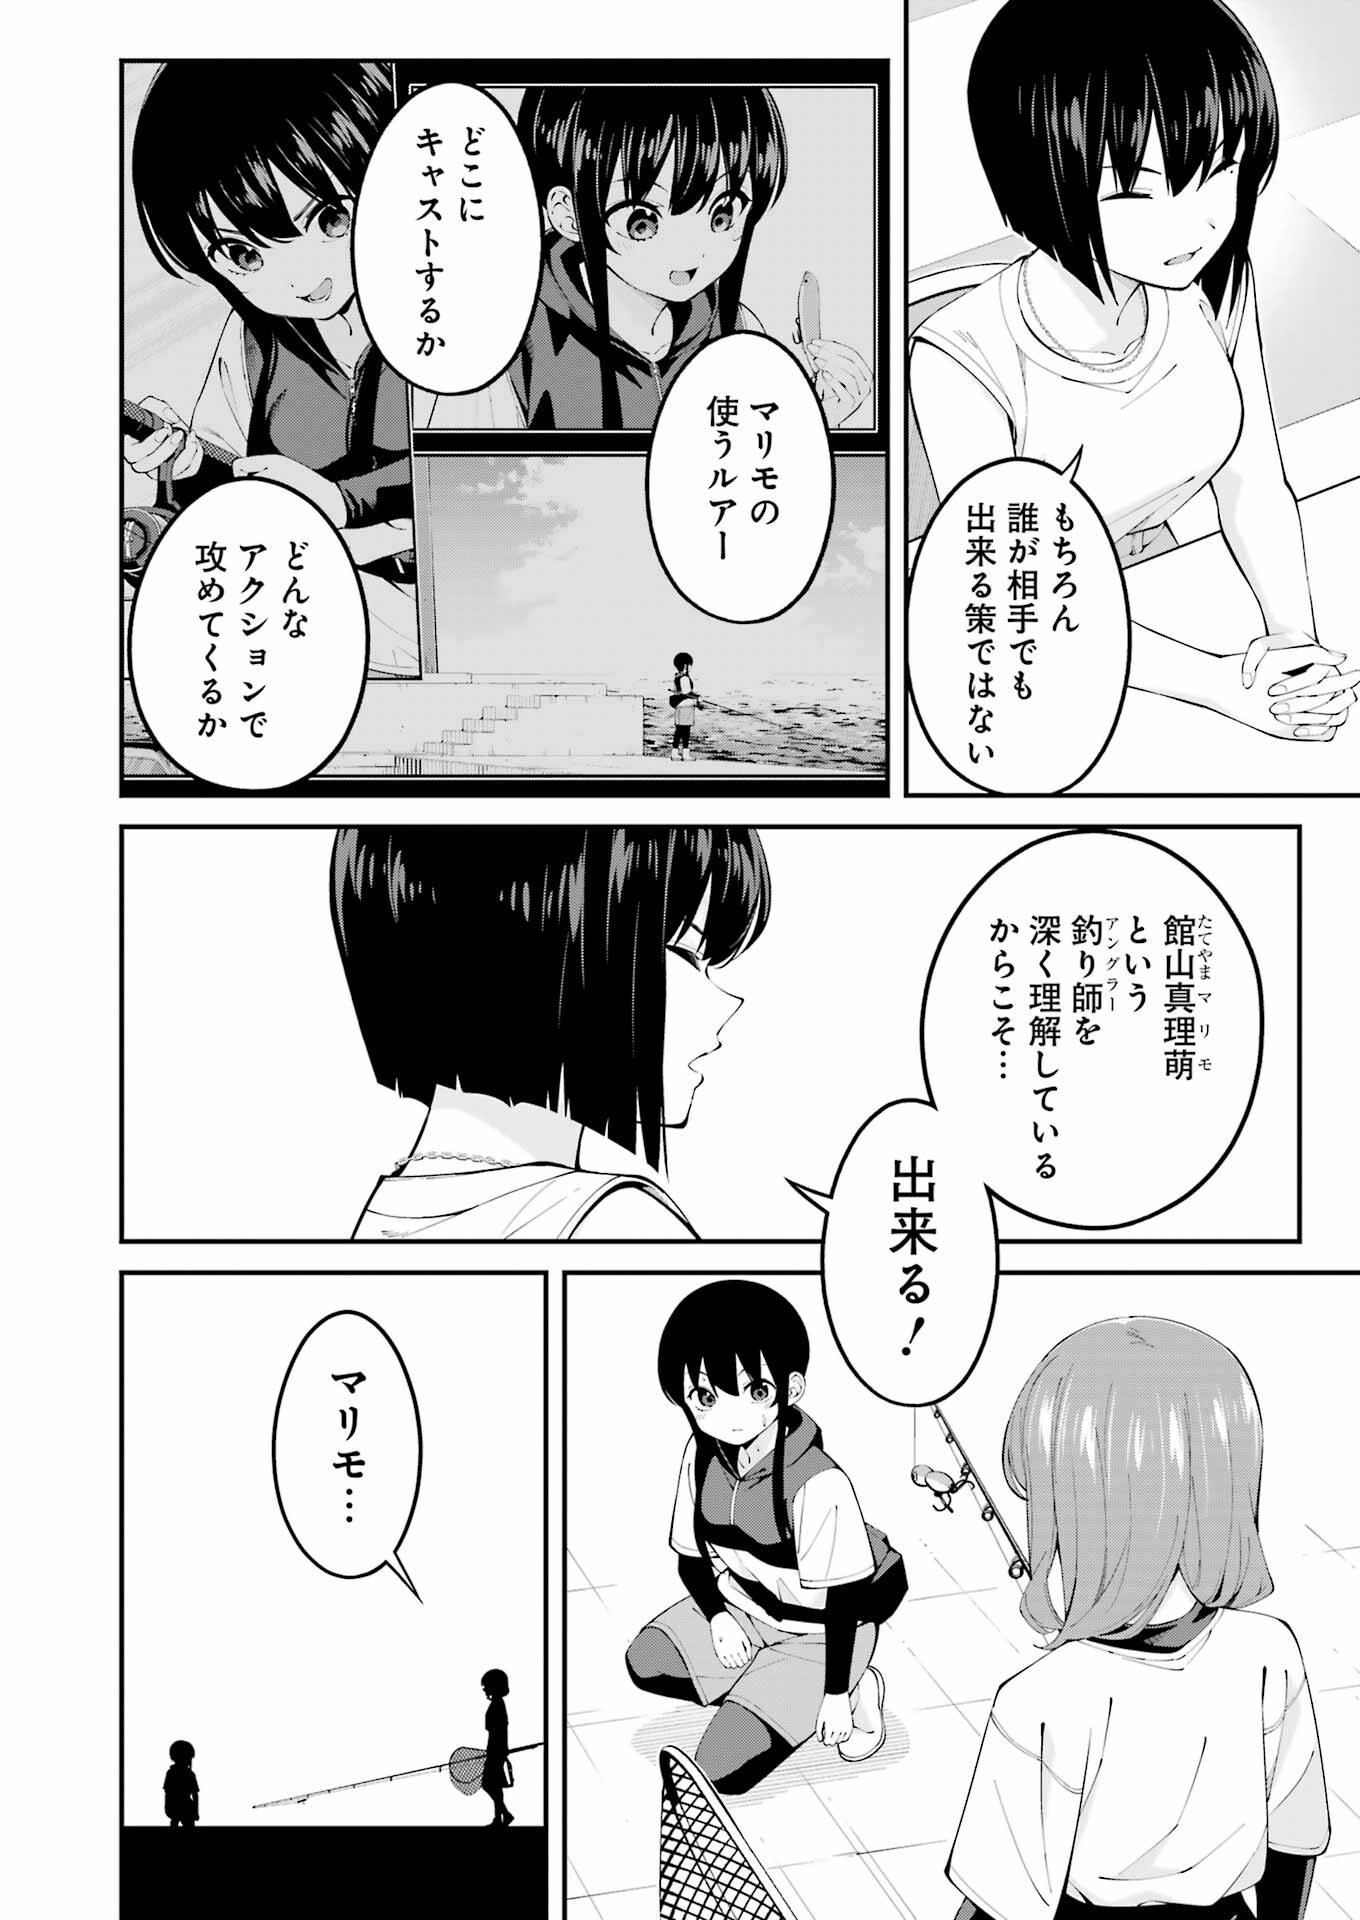 Tsuri Komachi - Chapter 61 - Page 8